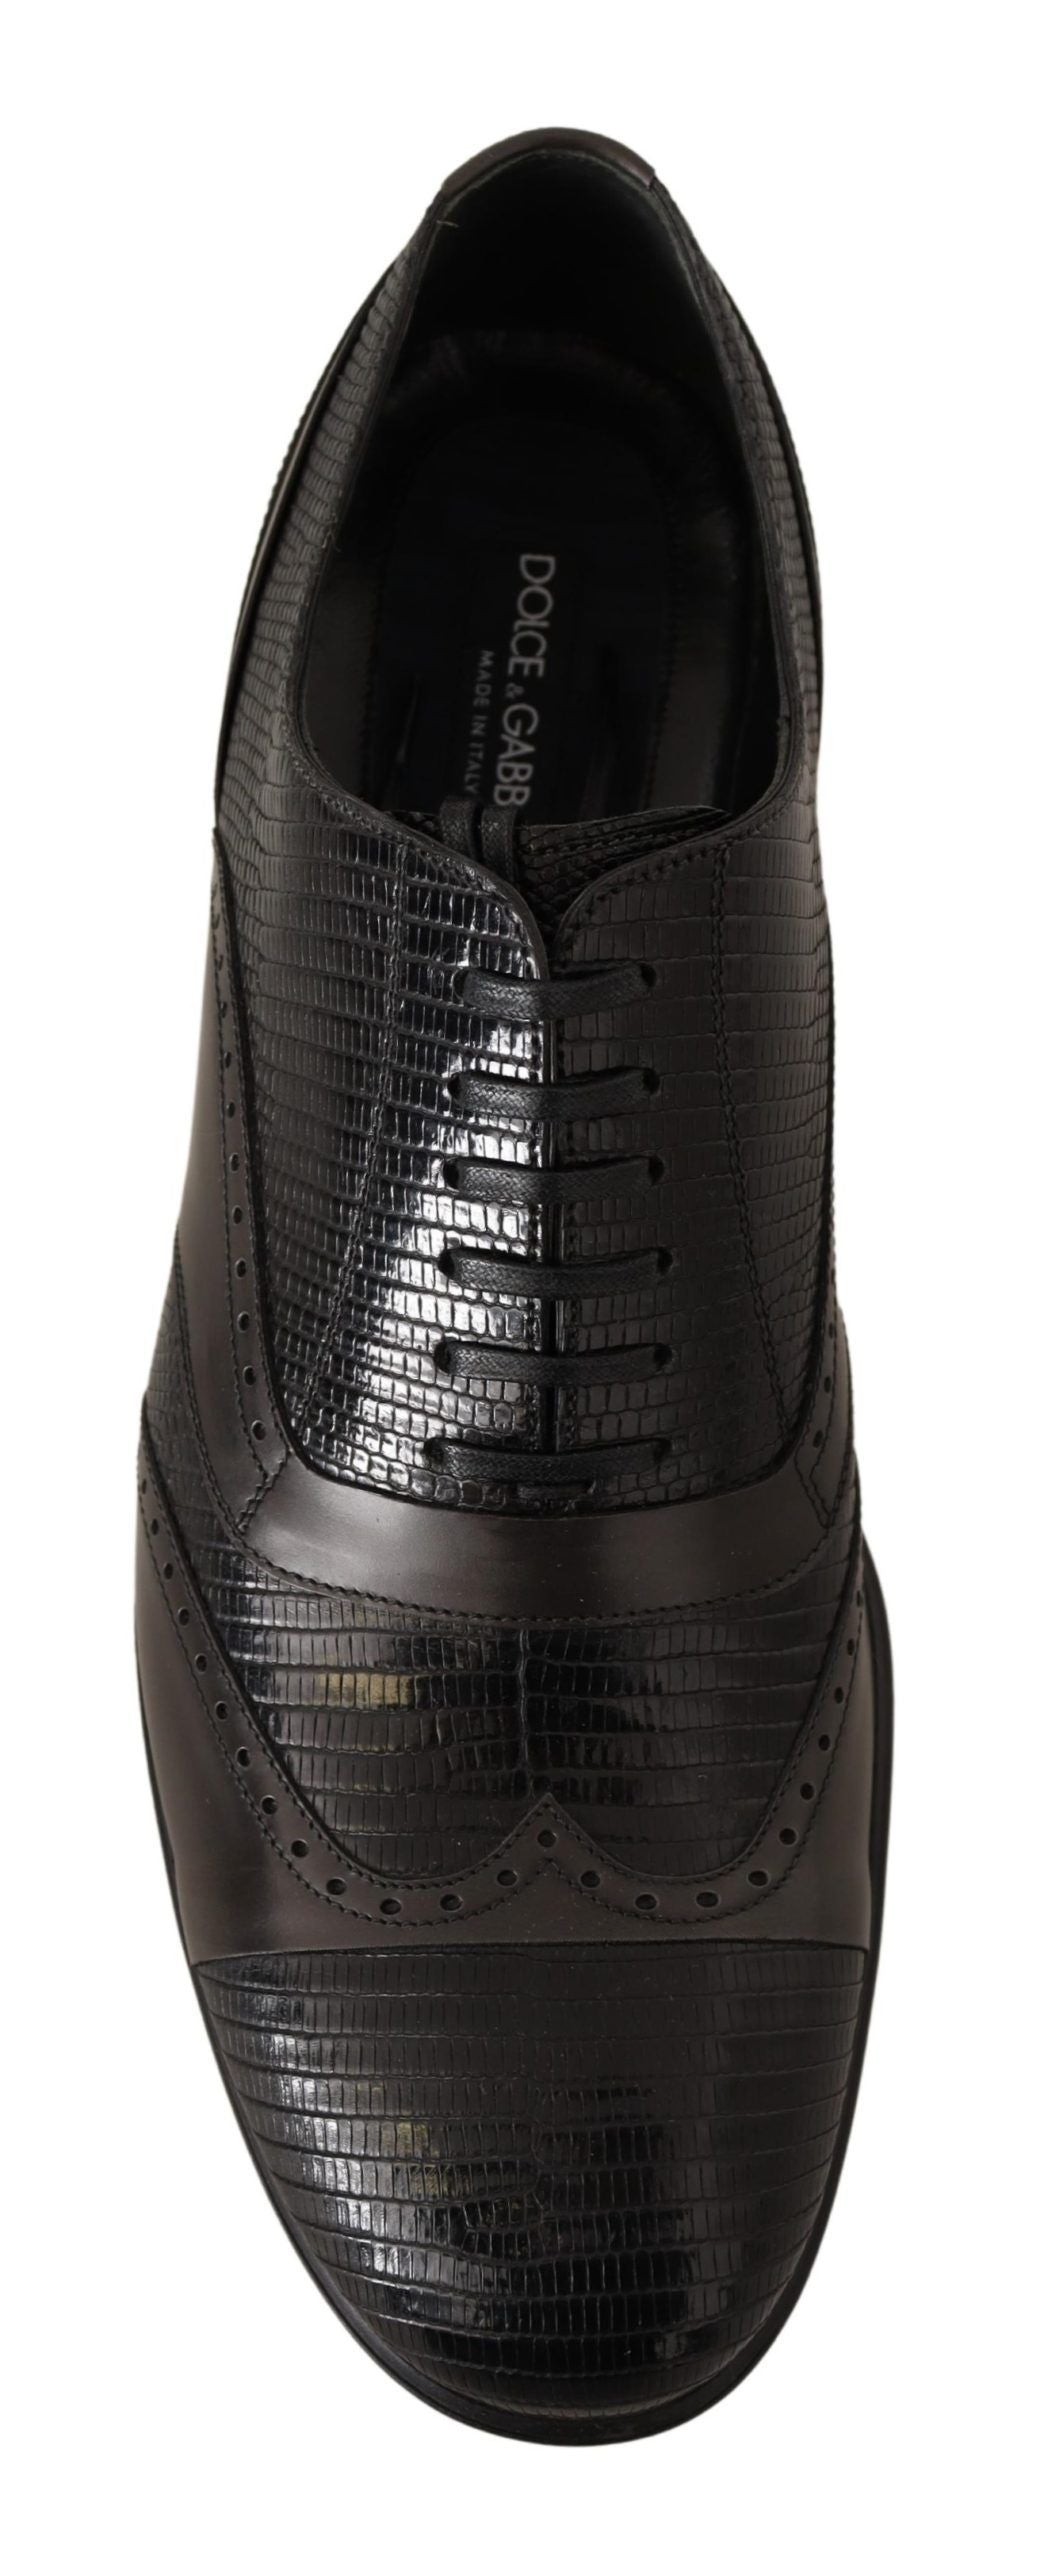 Dolce & Gabbana Elegant Brown Lizard Leather Oxford Shoes